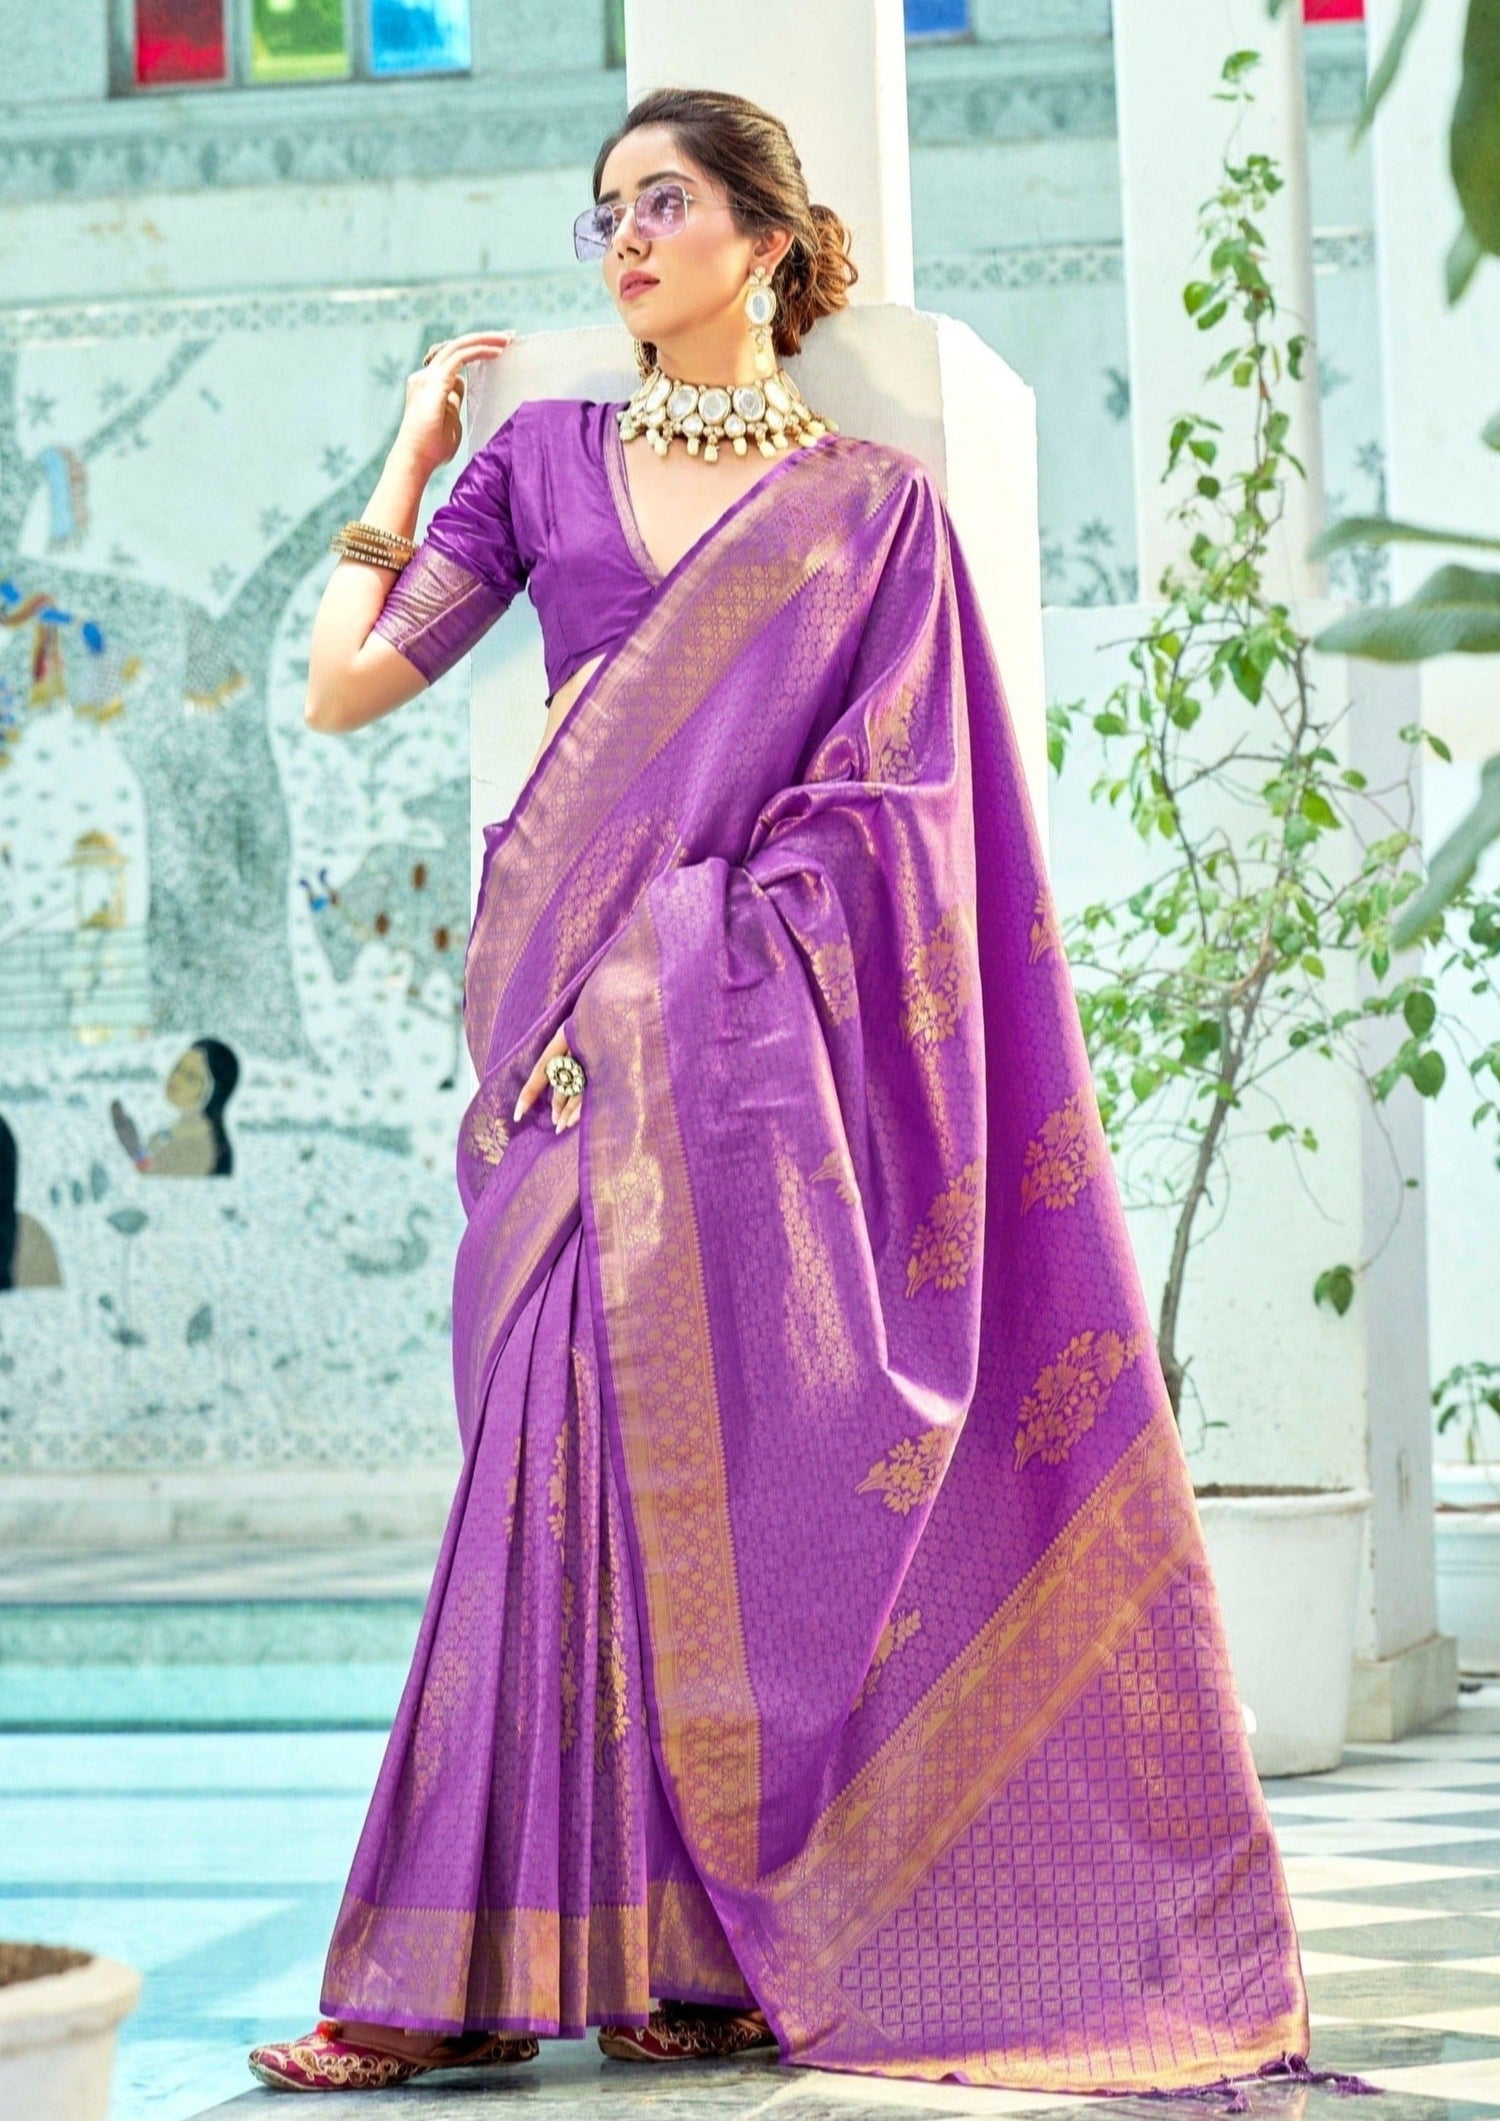 Luxury sarees online brands price uk india usa.